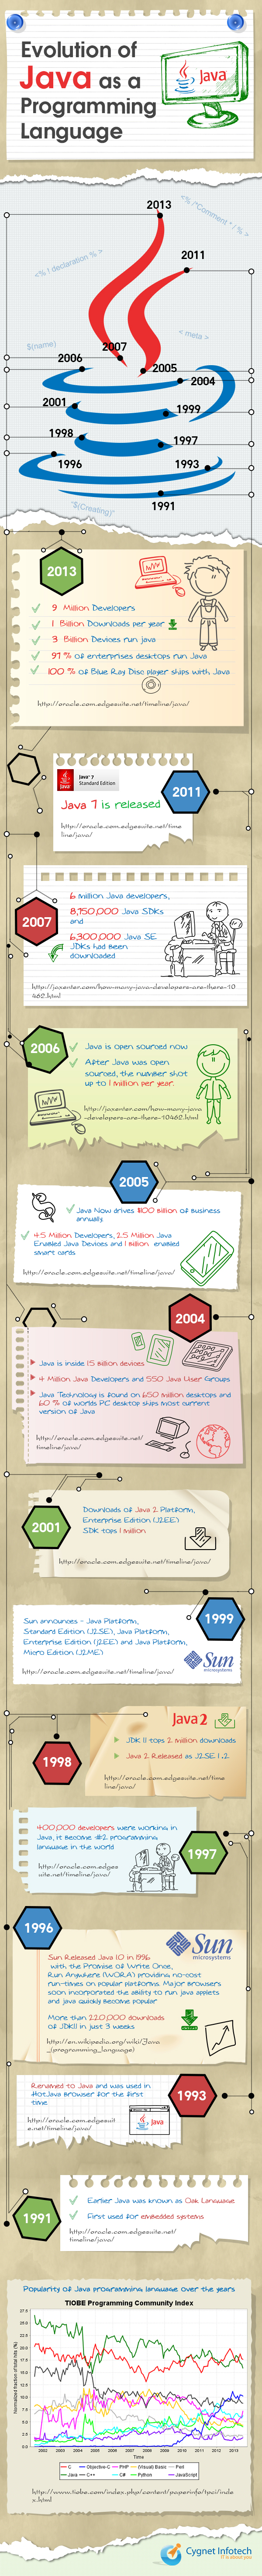 Evolution of Java